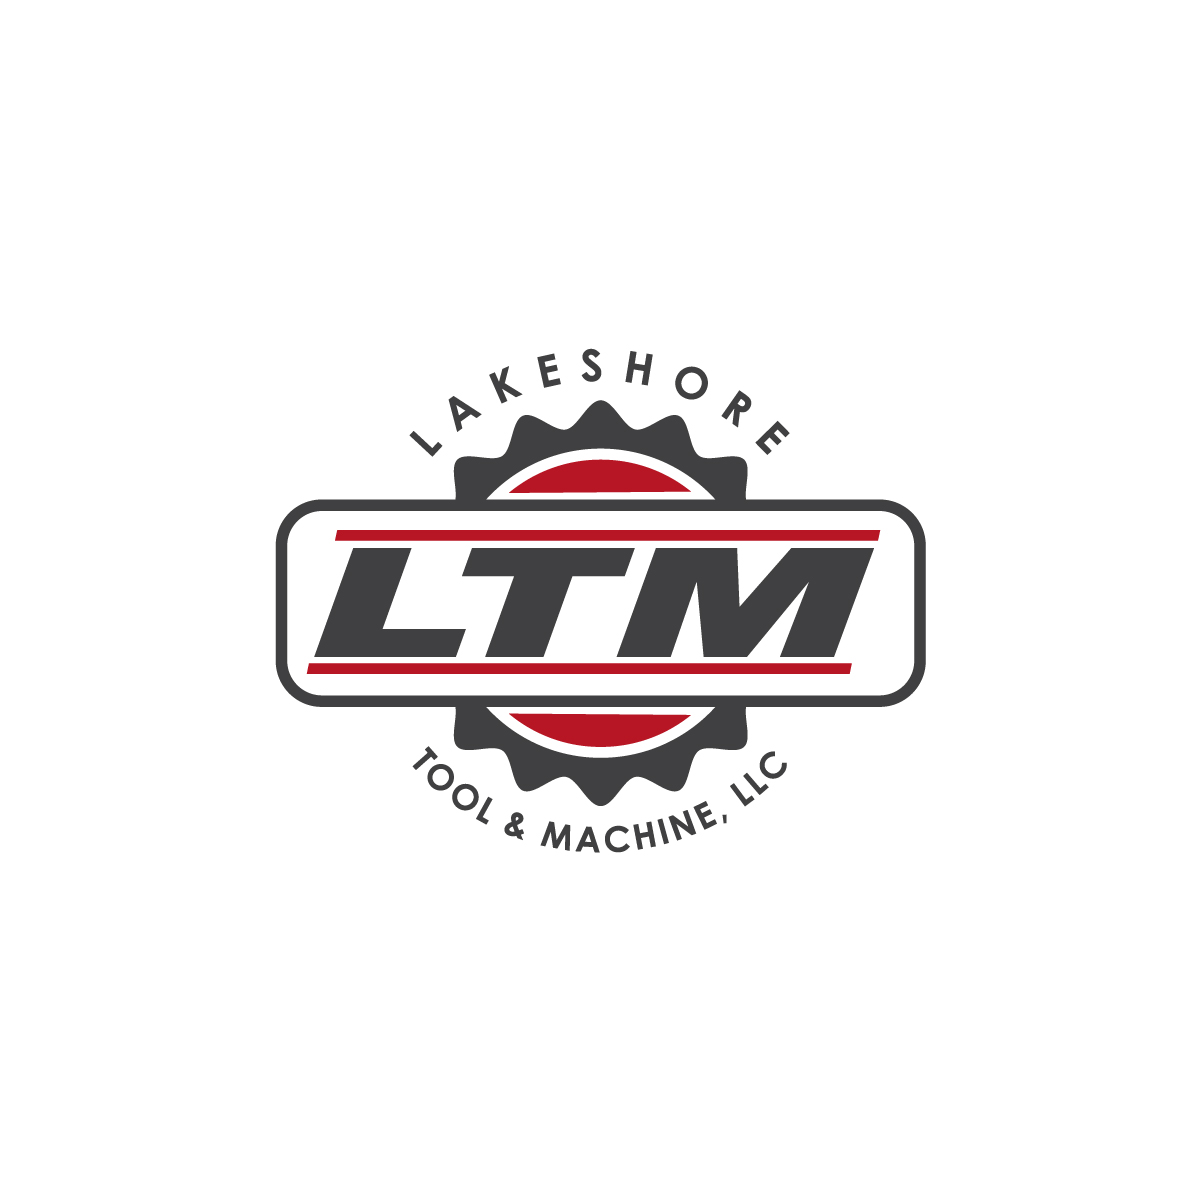 TEXT BASED LOGO DESIGNS FOR Lakeshore tool & machine, LLC